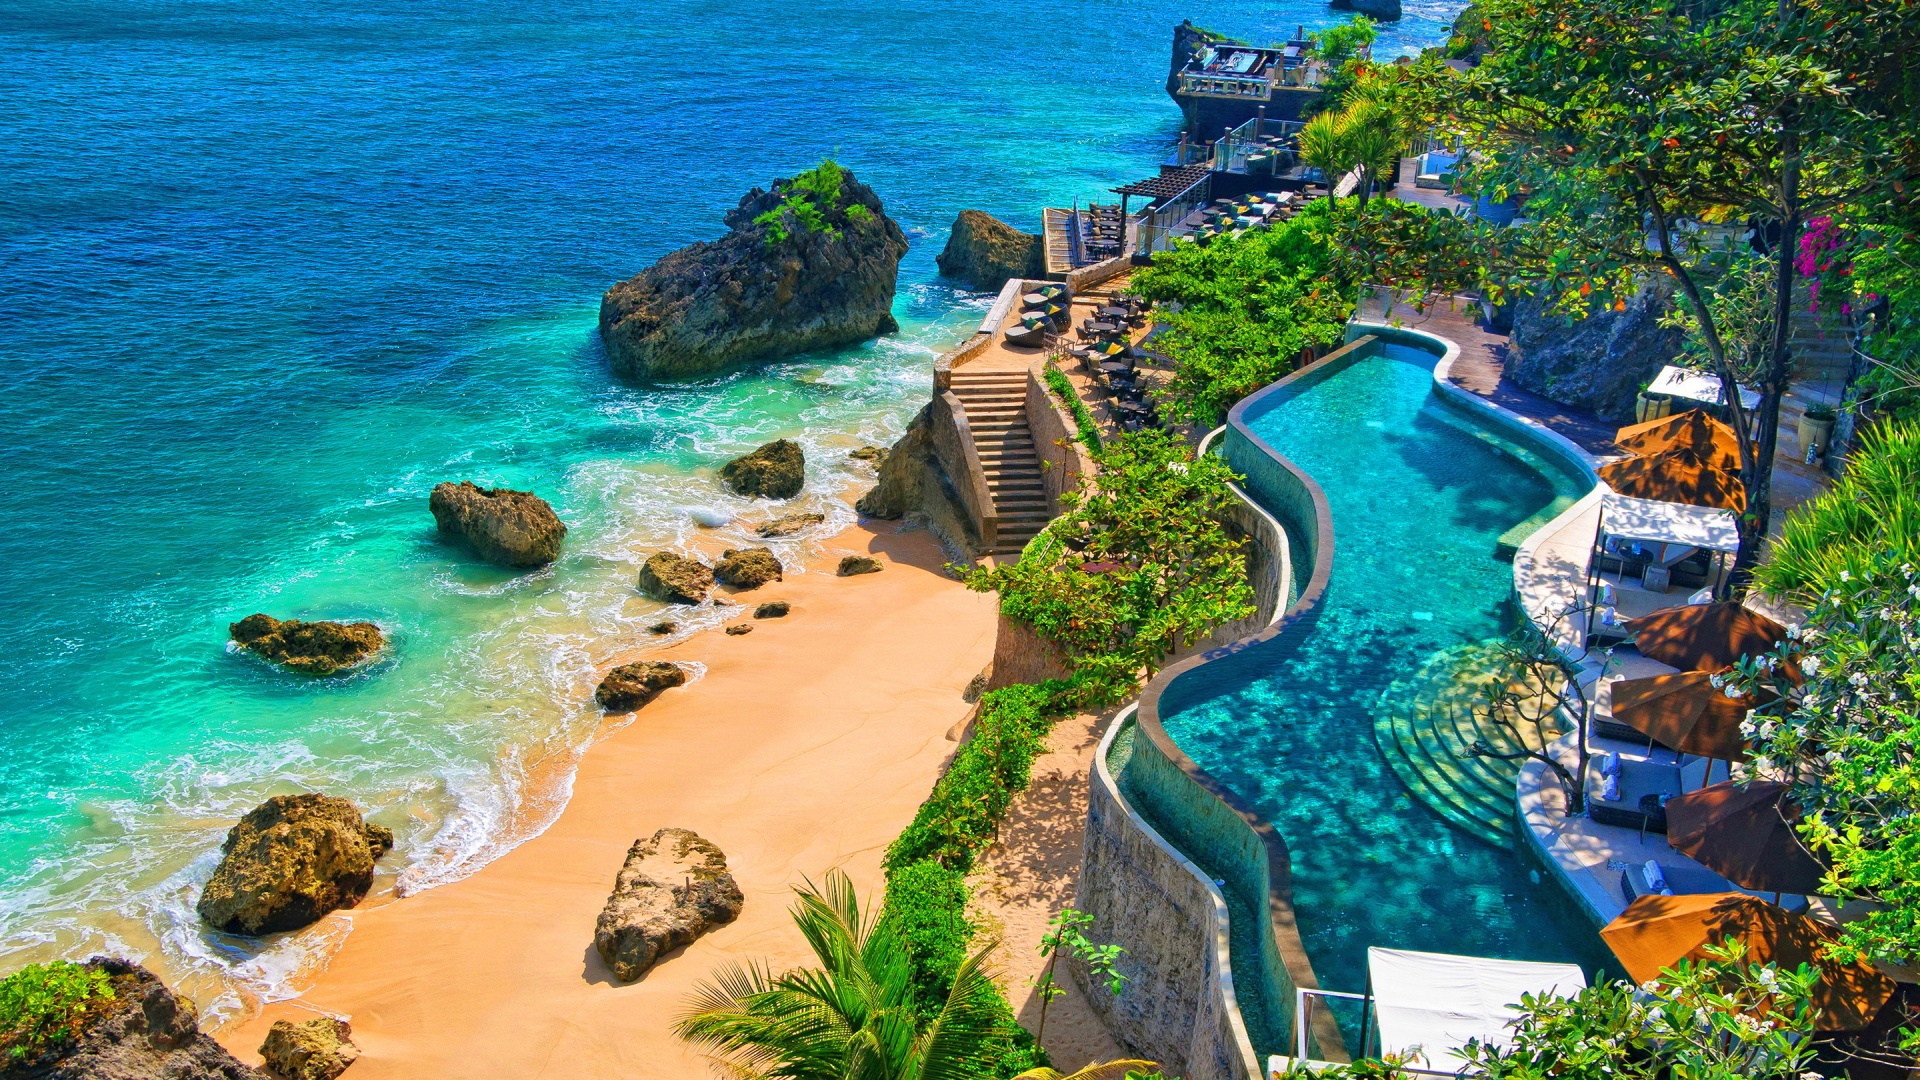 Bali Beach Resorts - wallpaper.